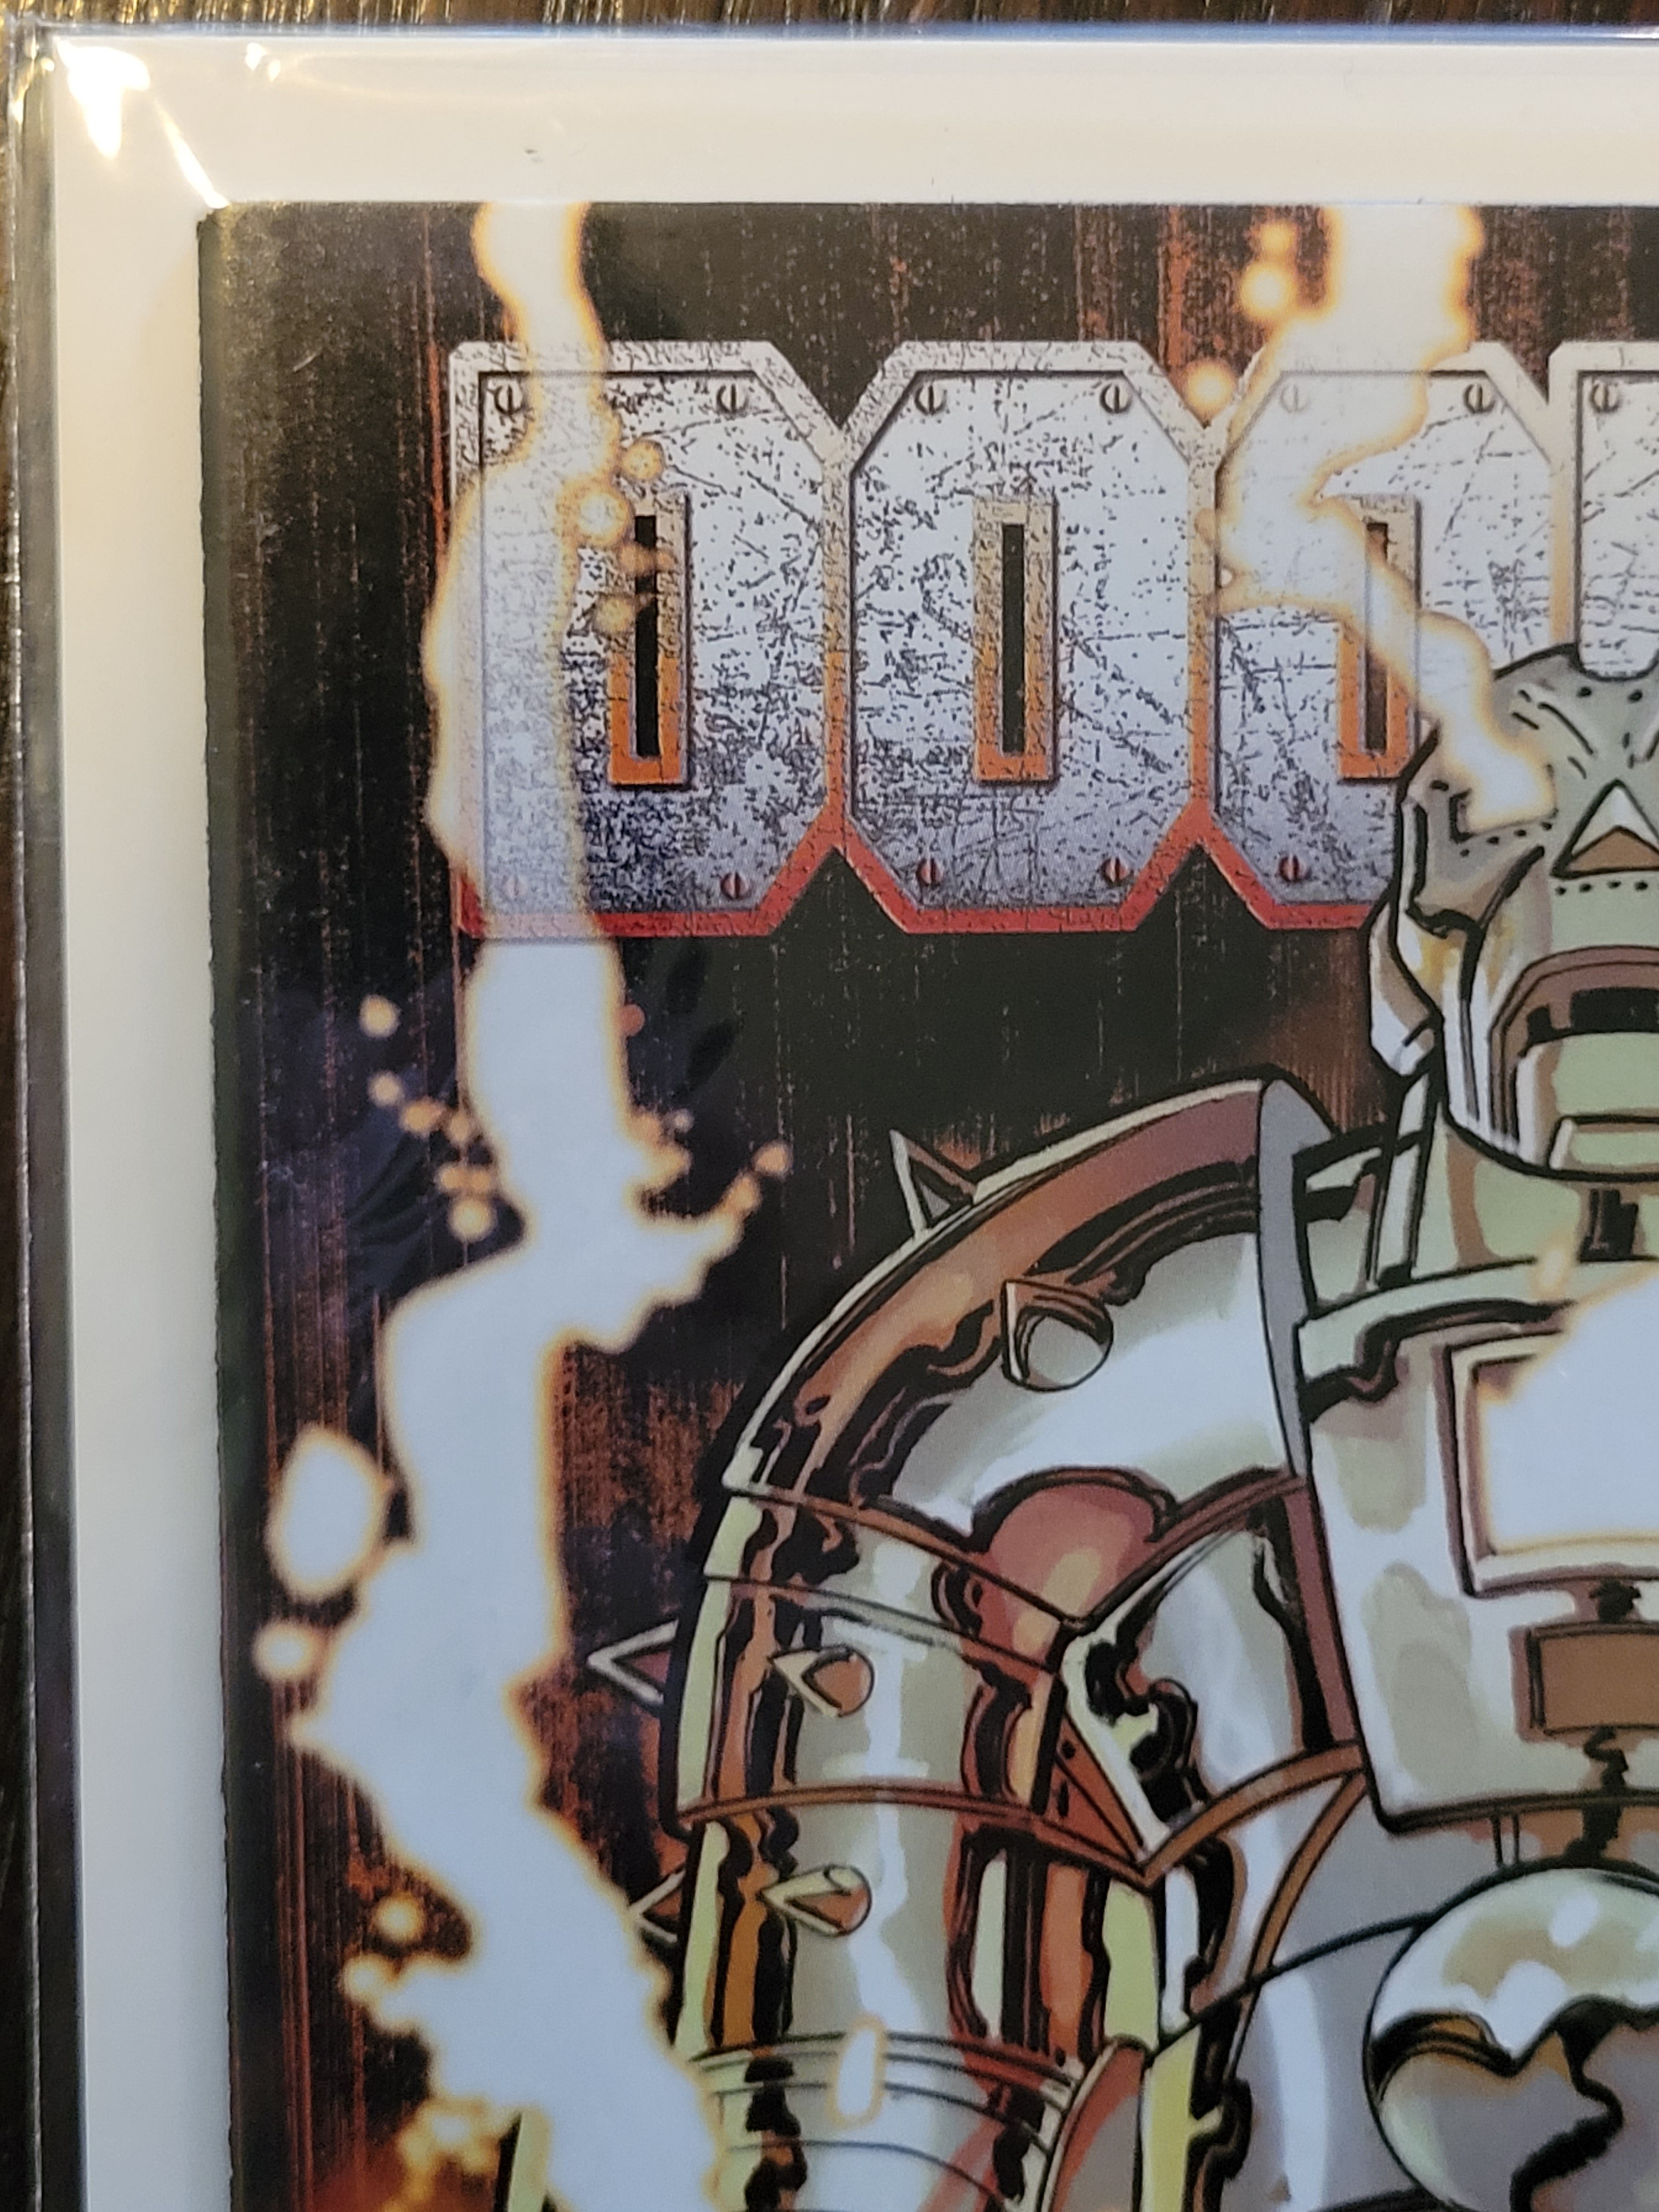 DoomWar Complete set (#1 Variant & #5 1st Midnight Angels Appearance)